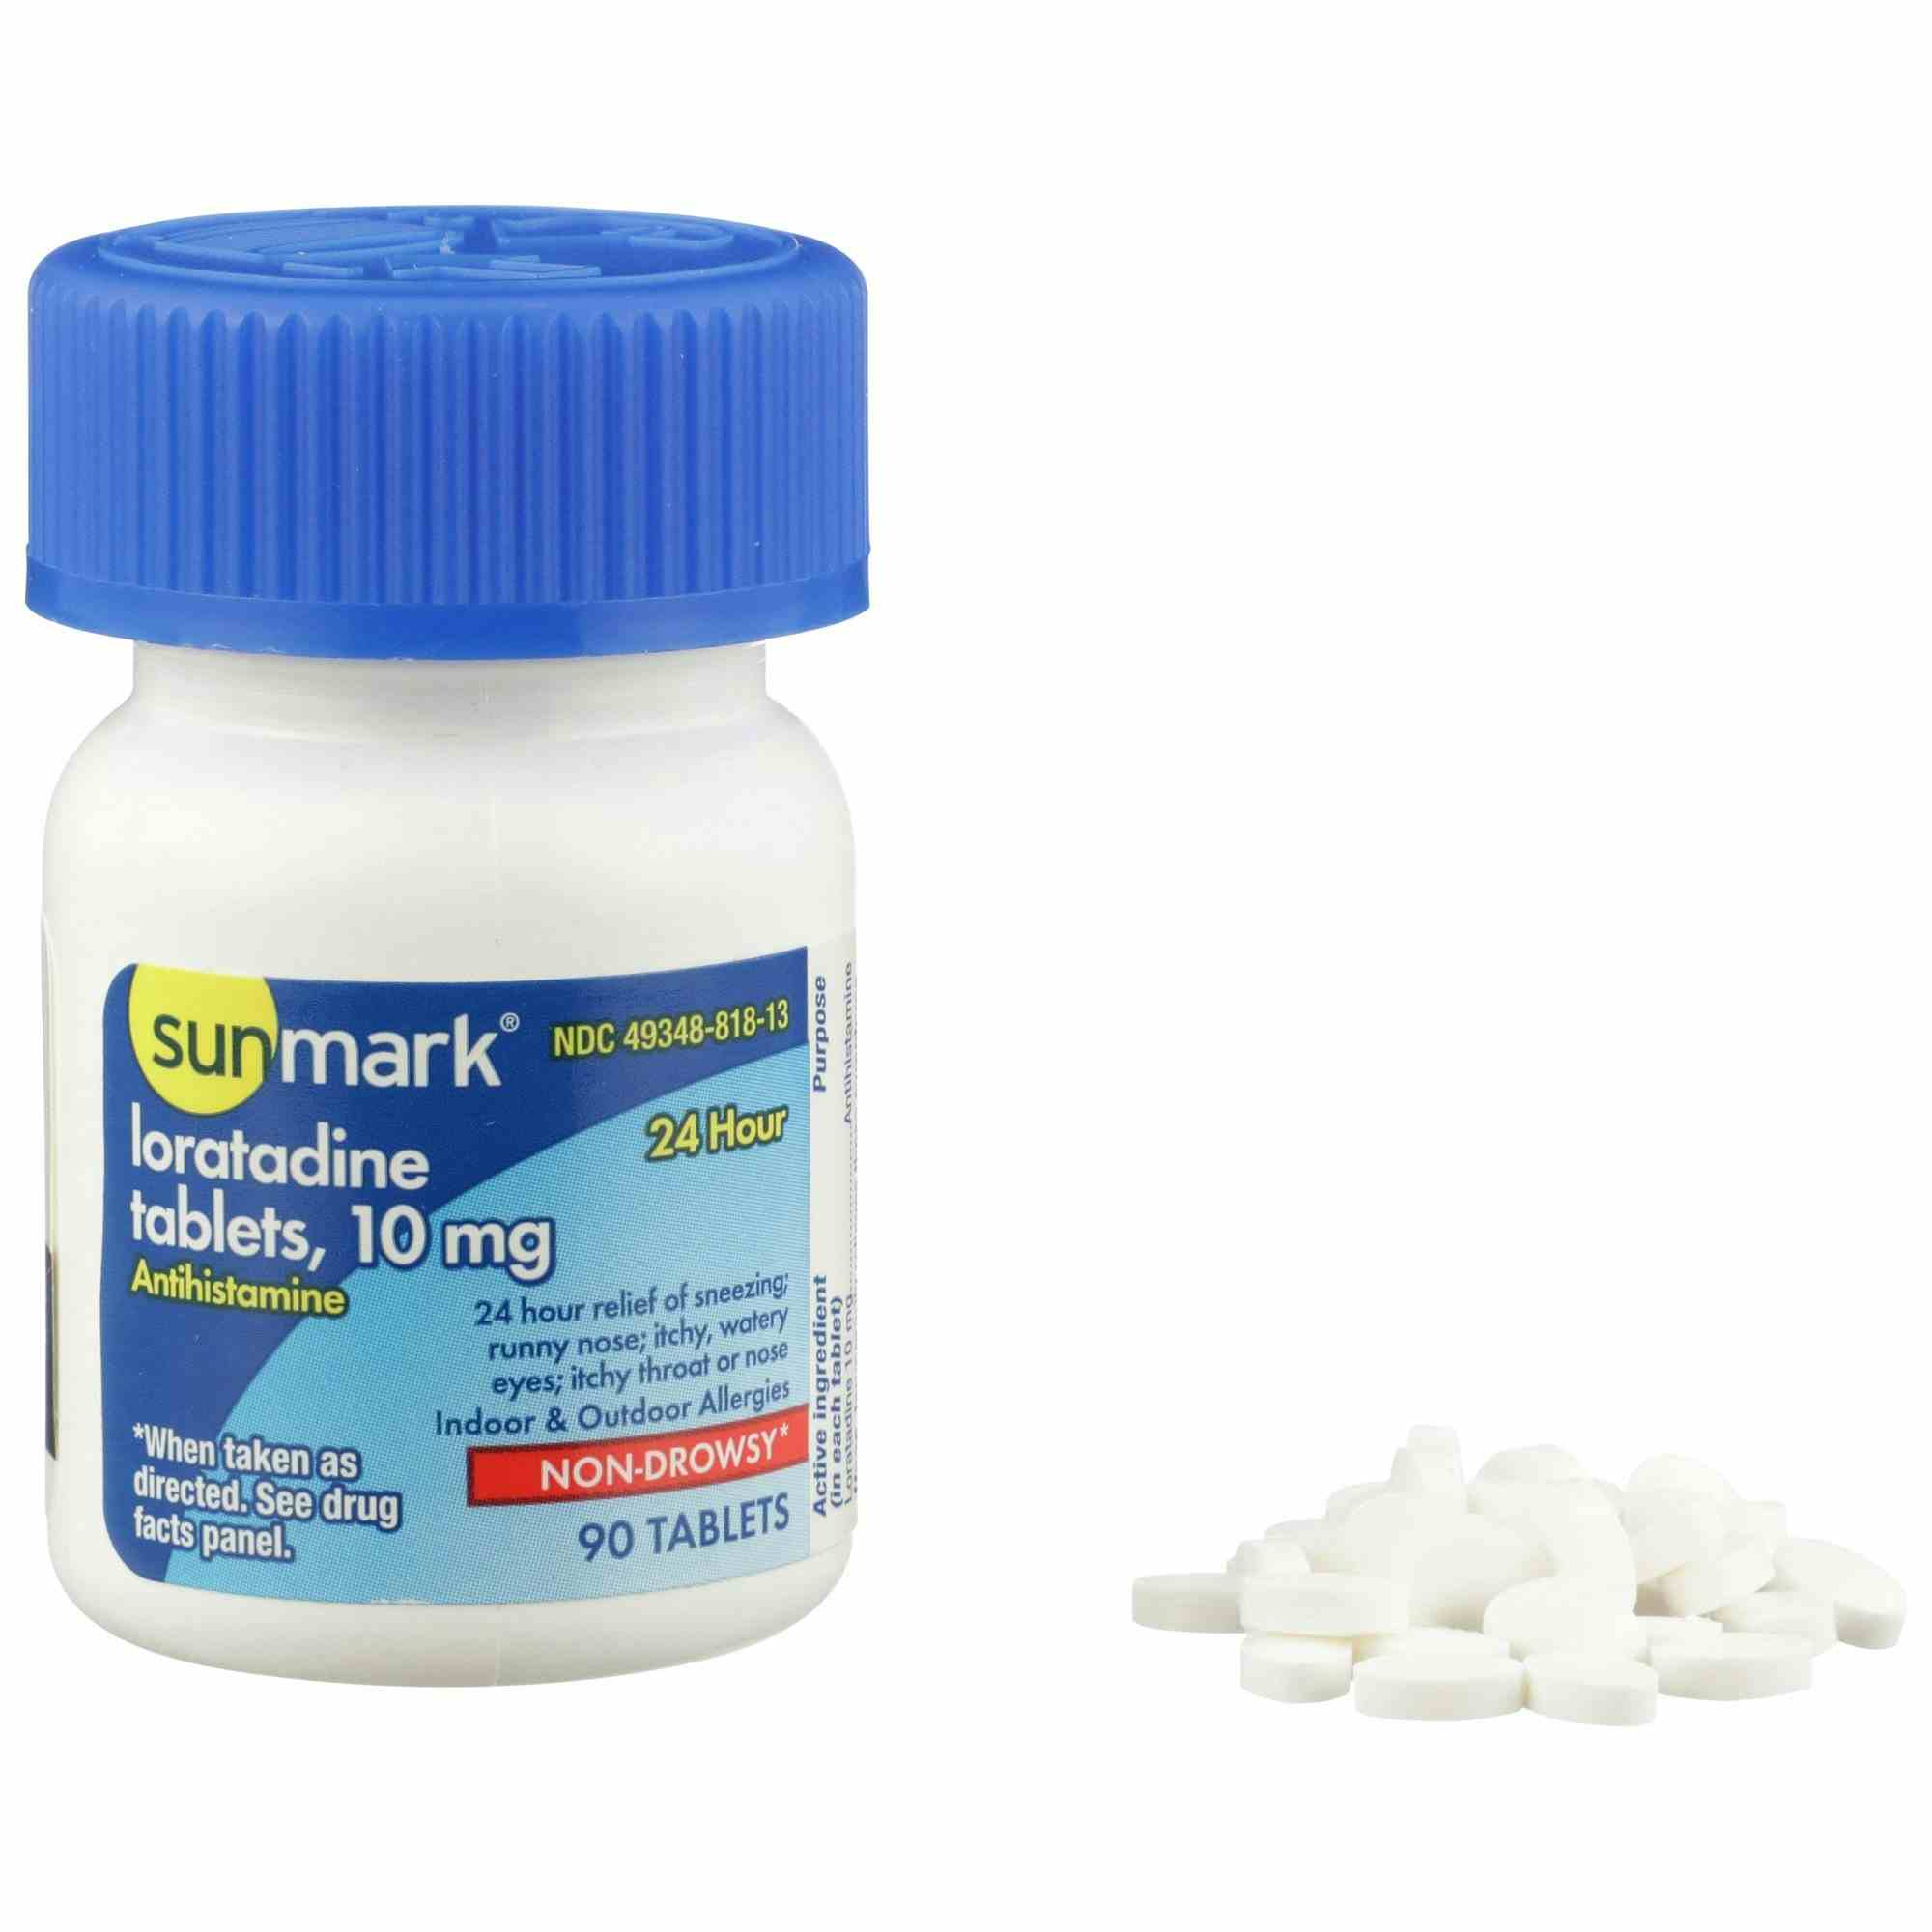 sunmark Loratadine Tablets Allergy Relief, 10 mg,, 49348081813, 90 Tablets - 1 Bottle